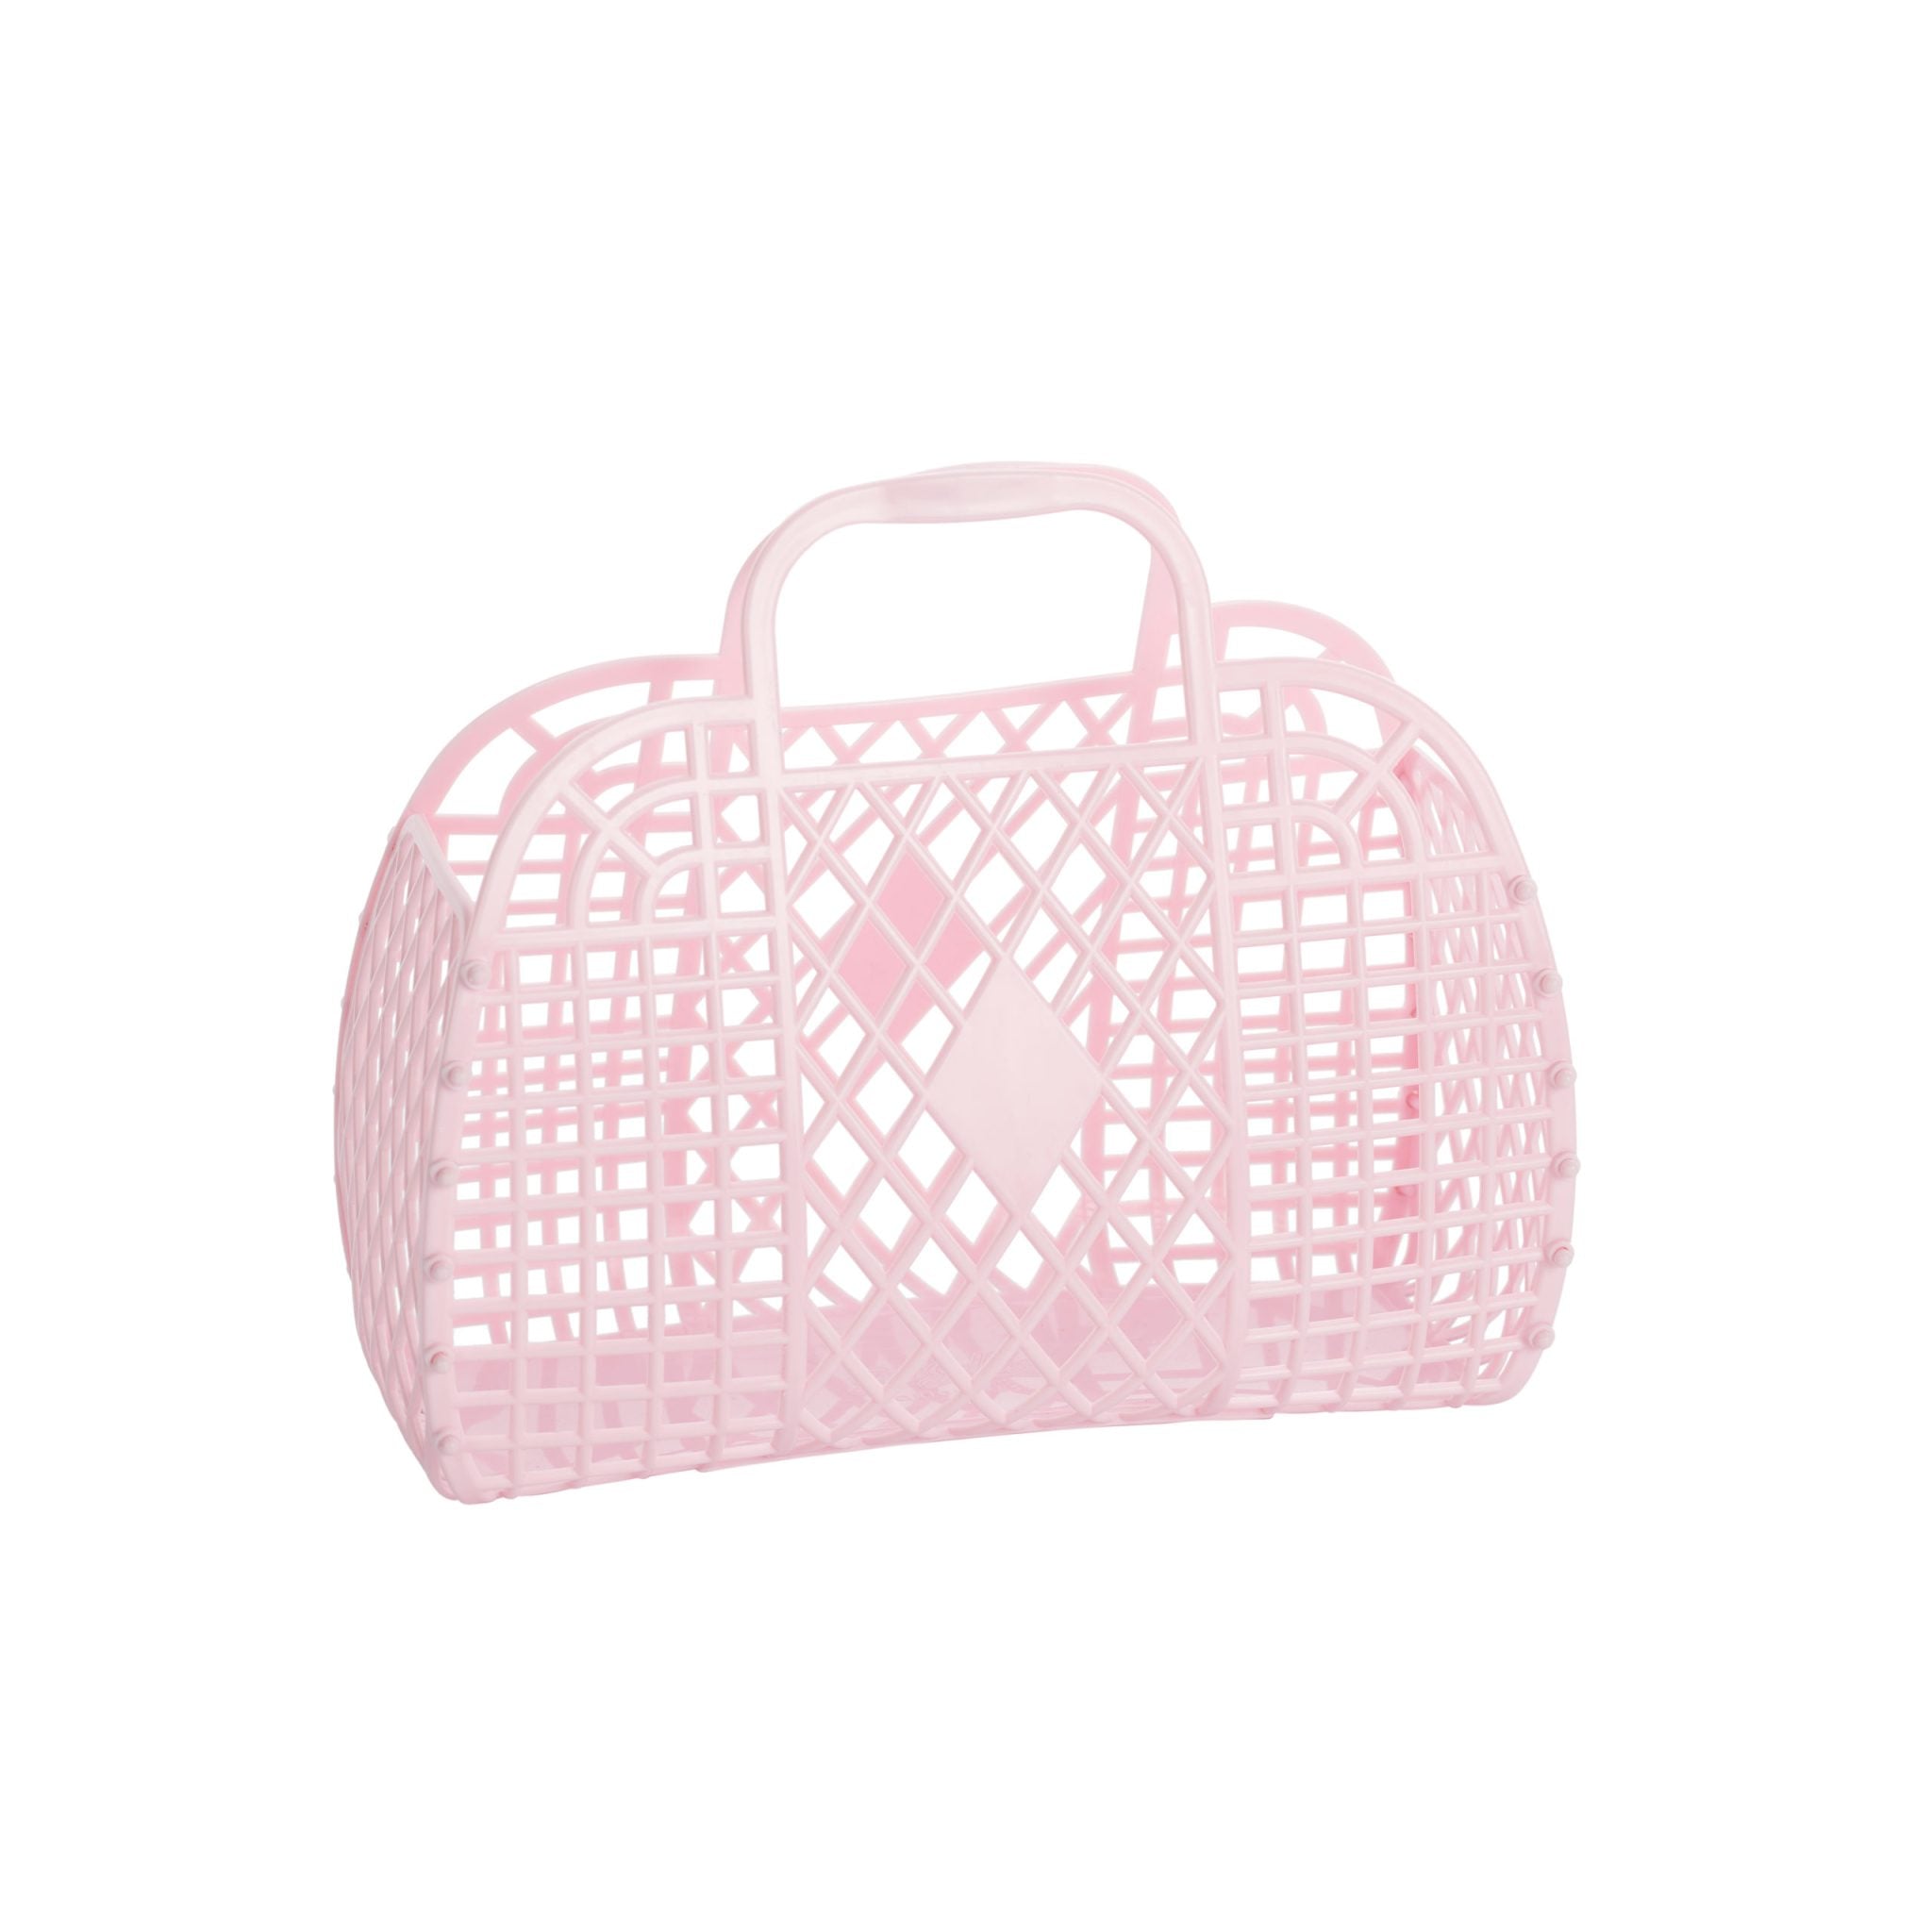 Retro Basket - Small Pink